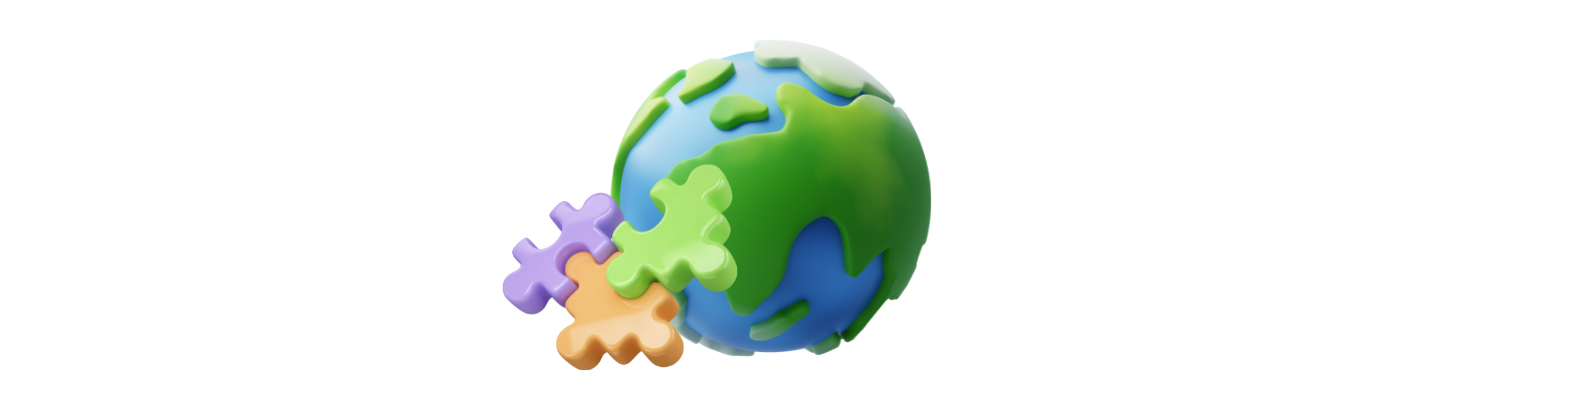 globe and puzzle icon 